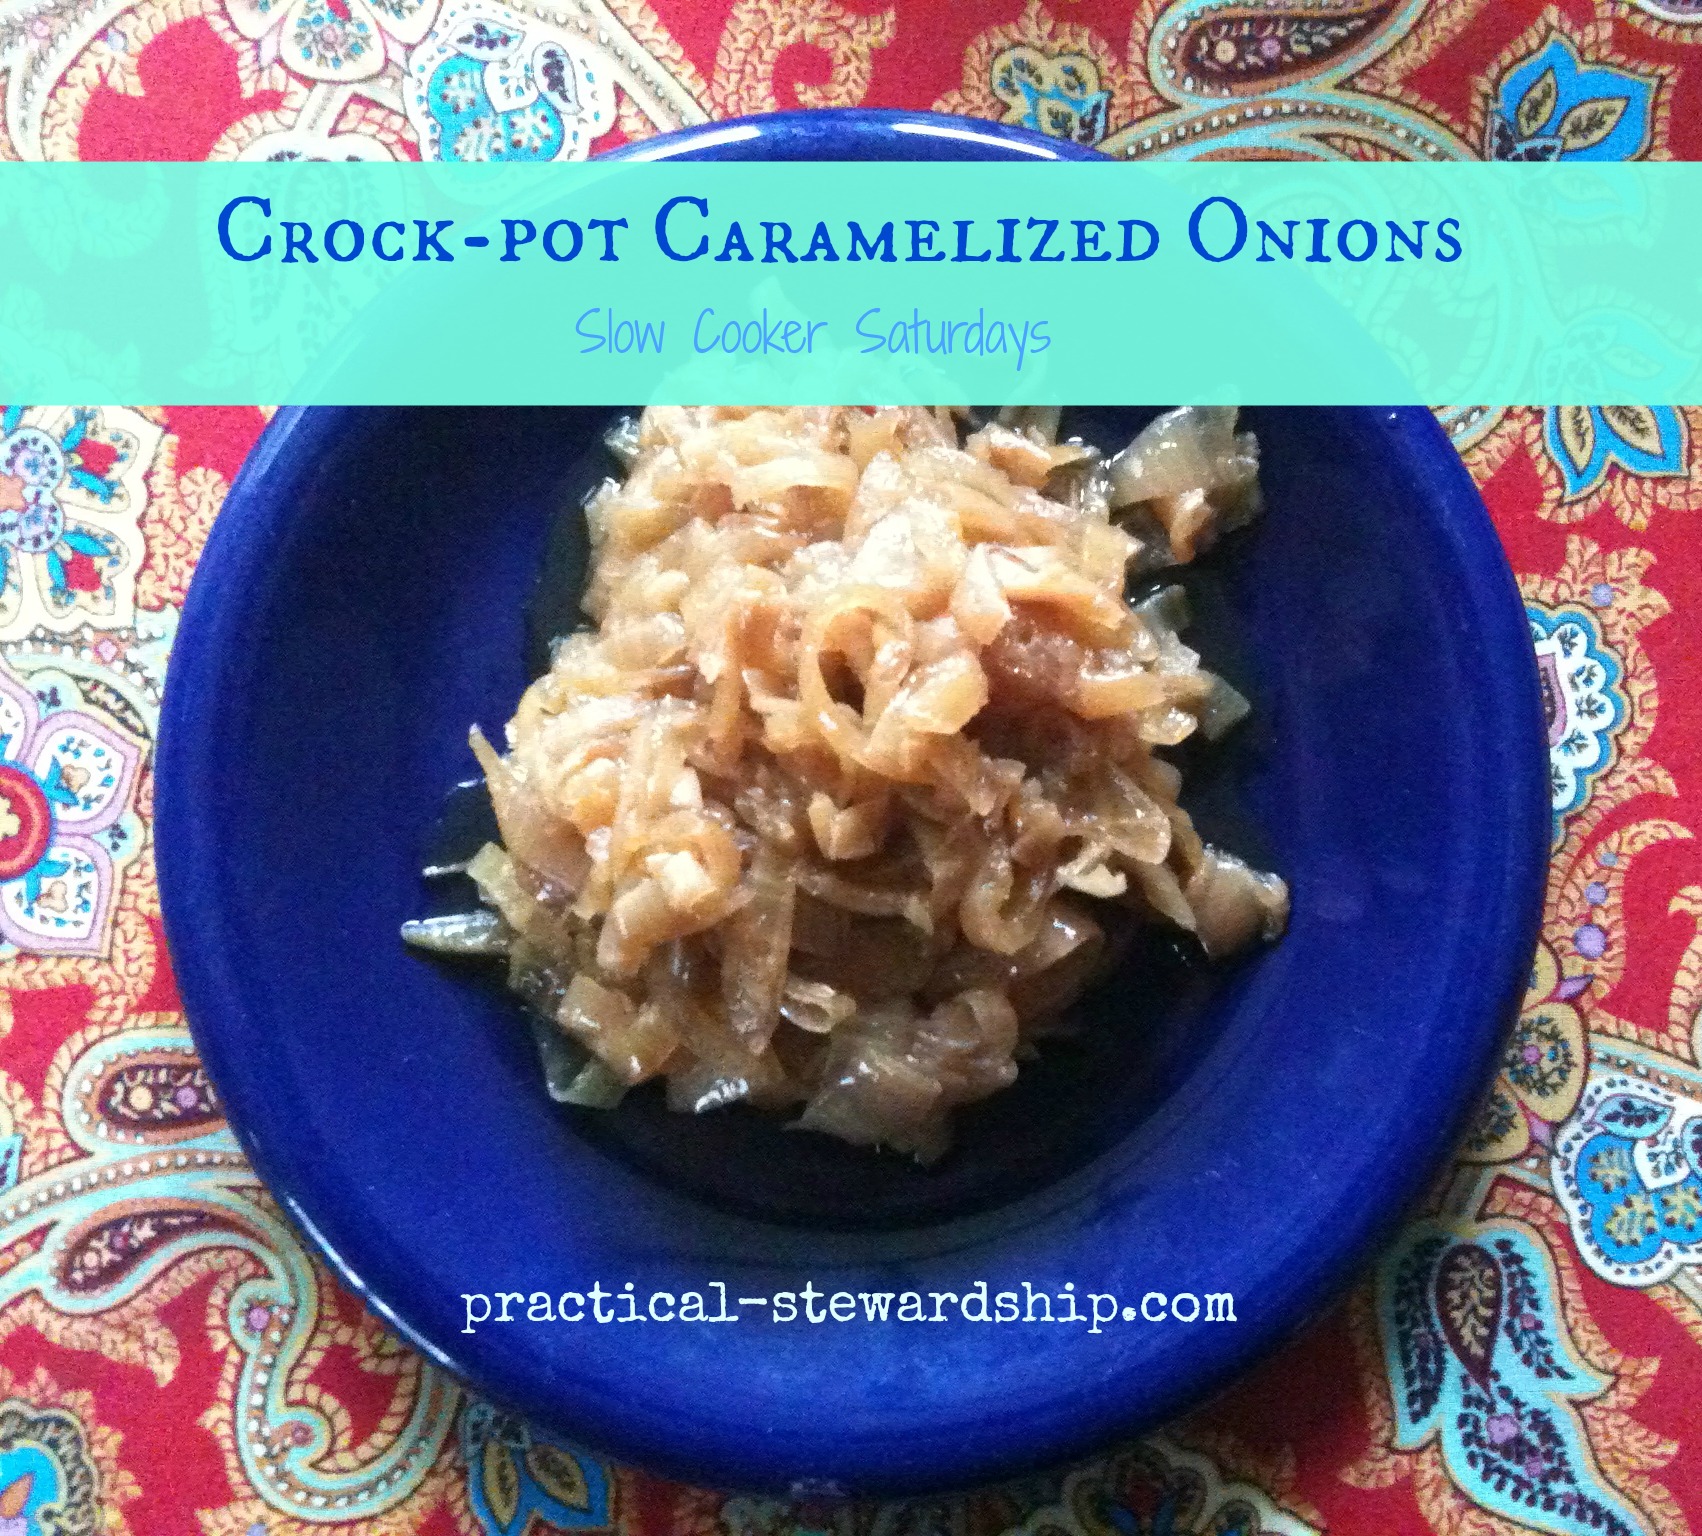 Crock-pot Caramelized Onions @ practical-stewardship.com